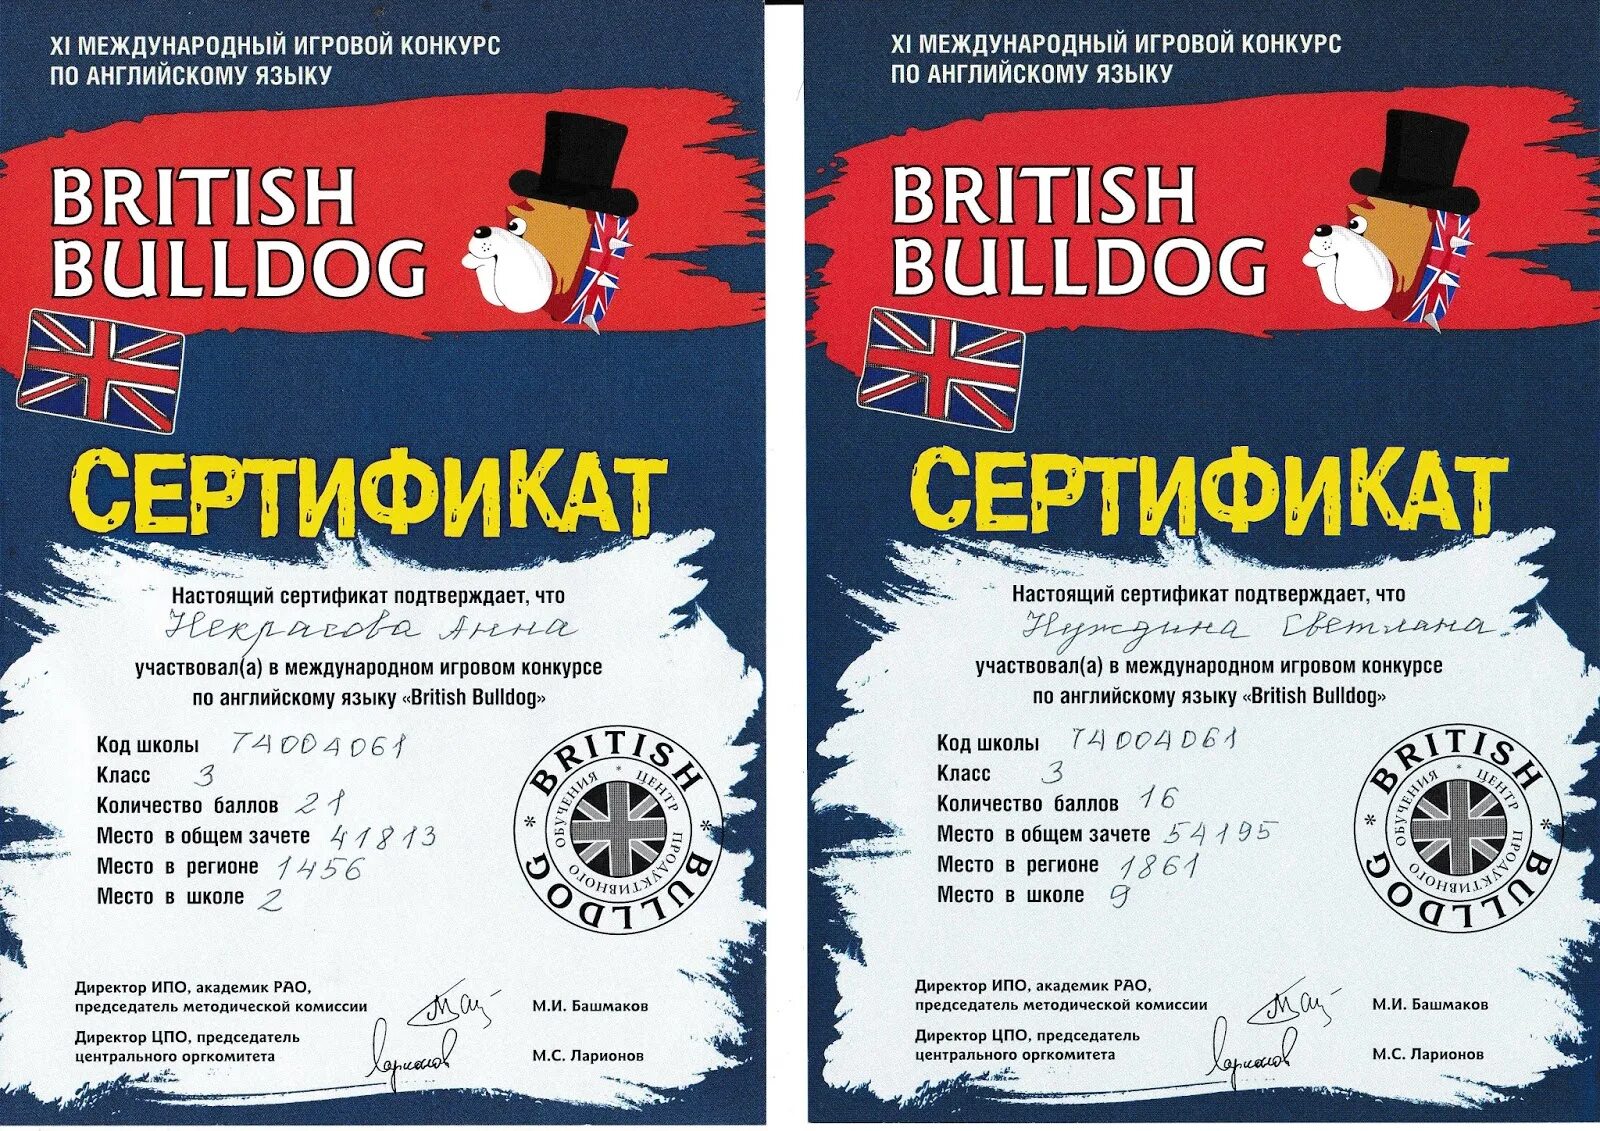 Бритиш бульдог сертификаты 2021. British Bulldog сертификат. Британский бульдог грамота. Сертификаты рич